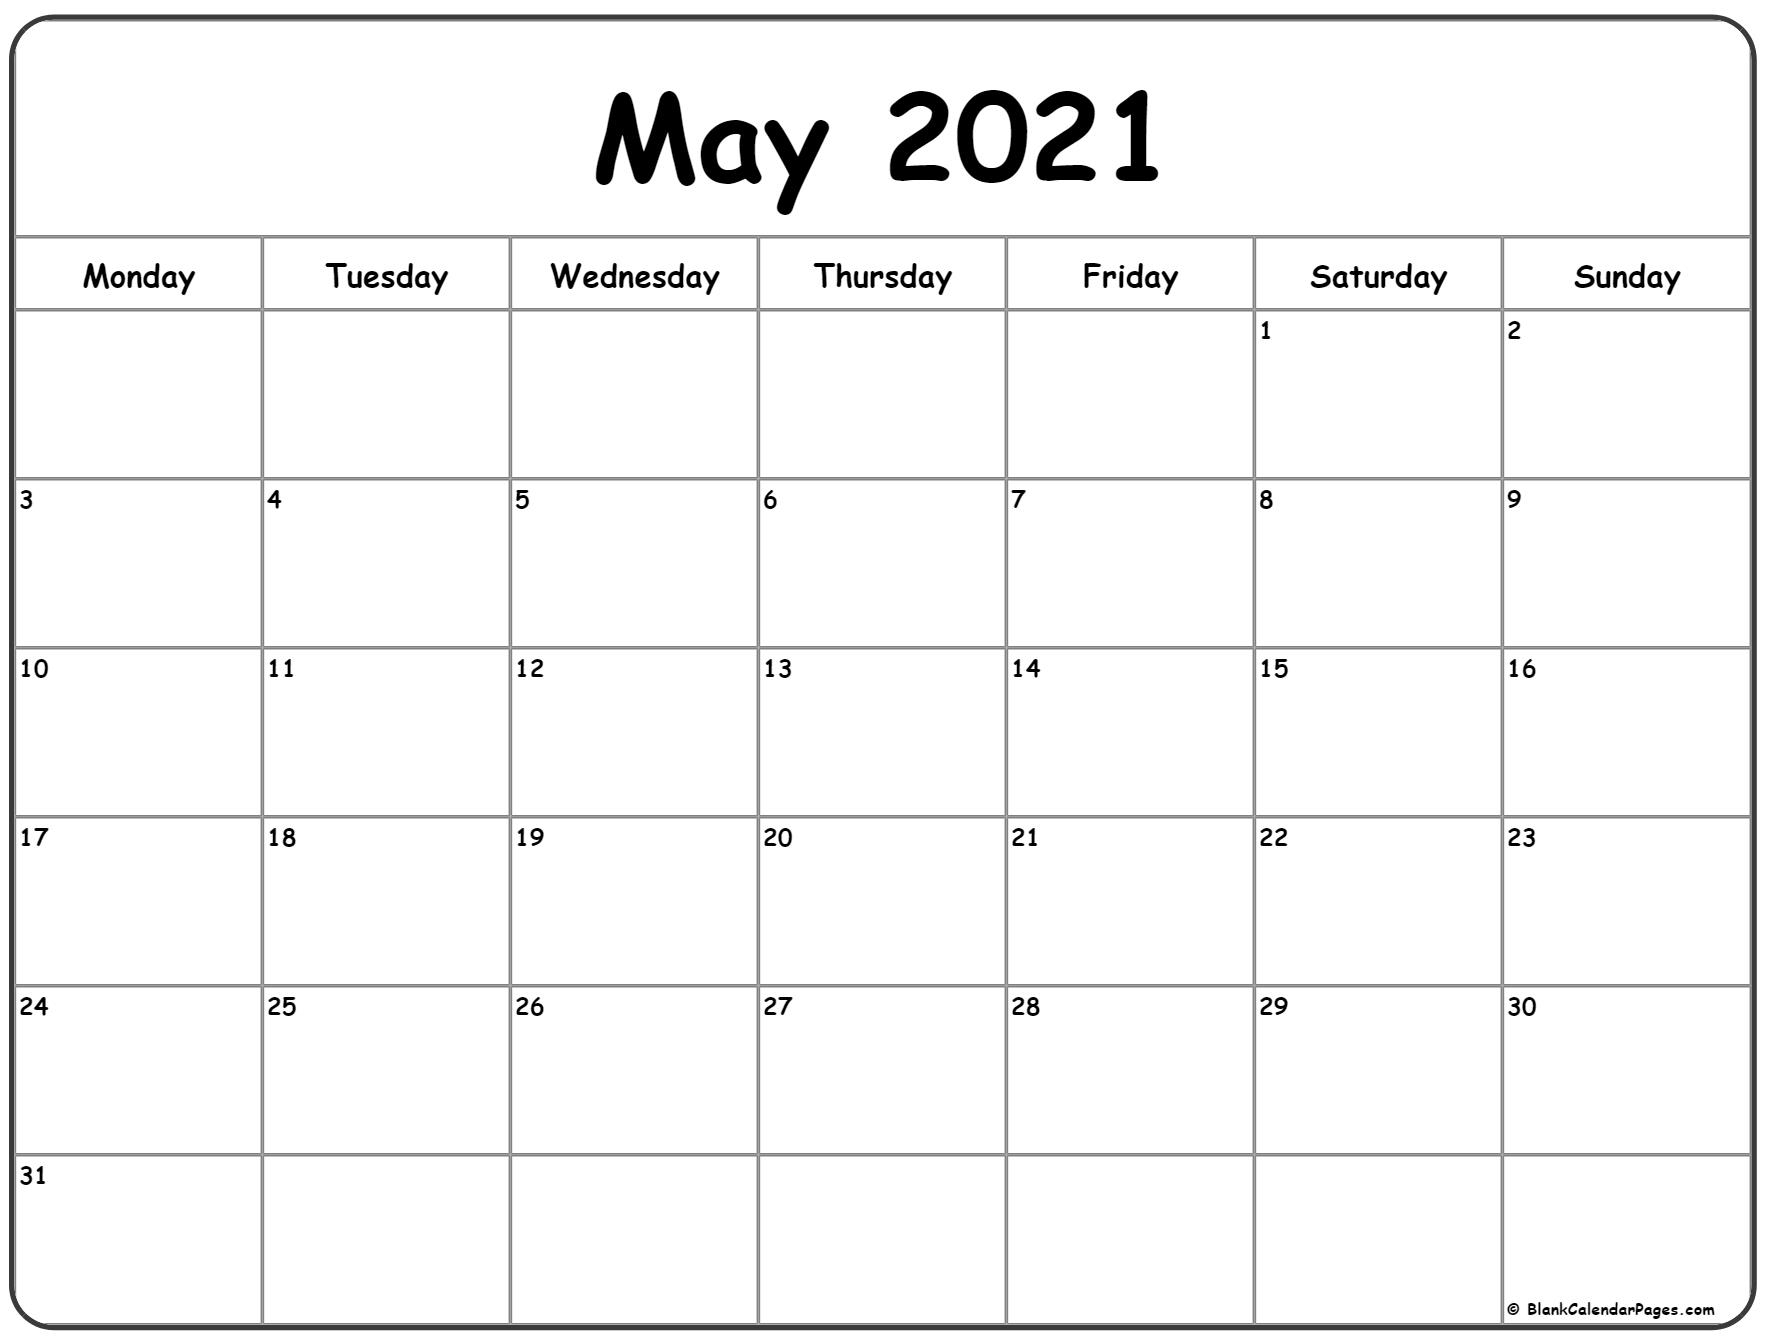 May 2021 Monday Calendar | Monday To Sunday